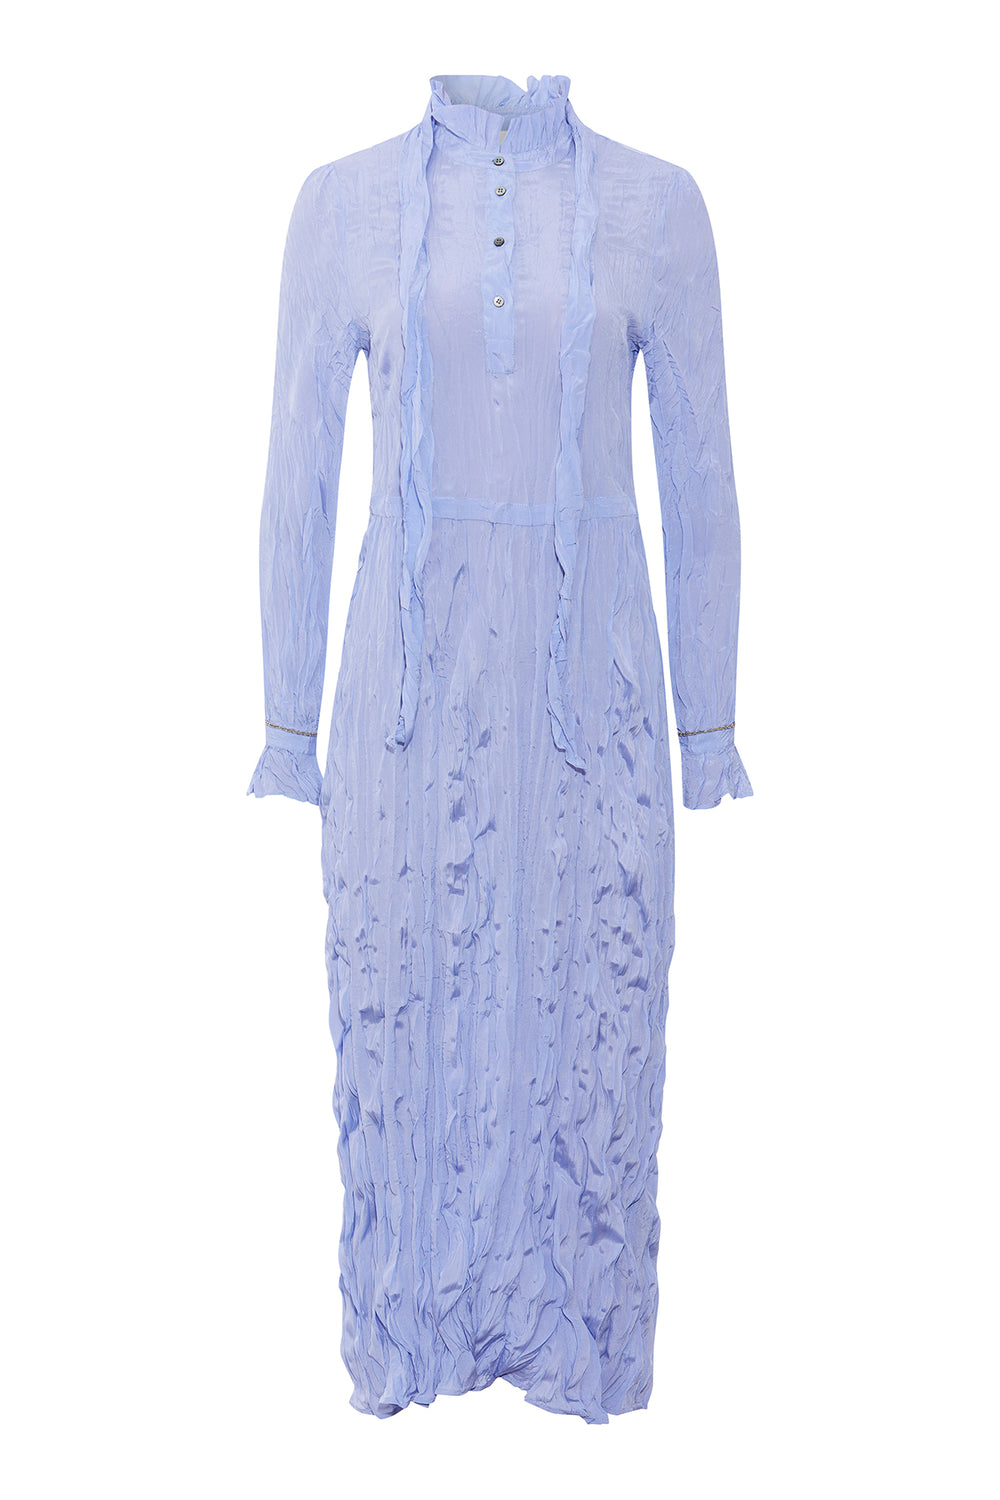 Heartmade Velmia dress HM DRESSES 277 Cornflower blue